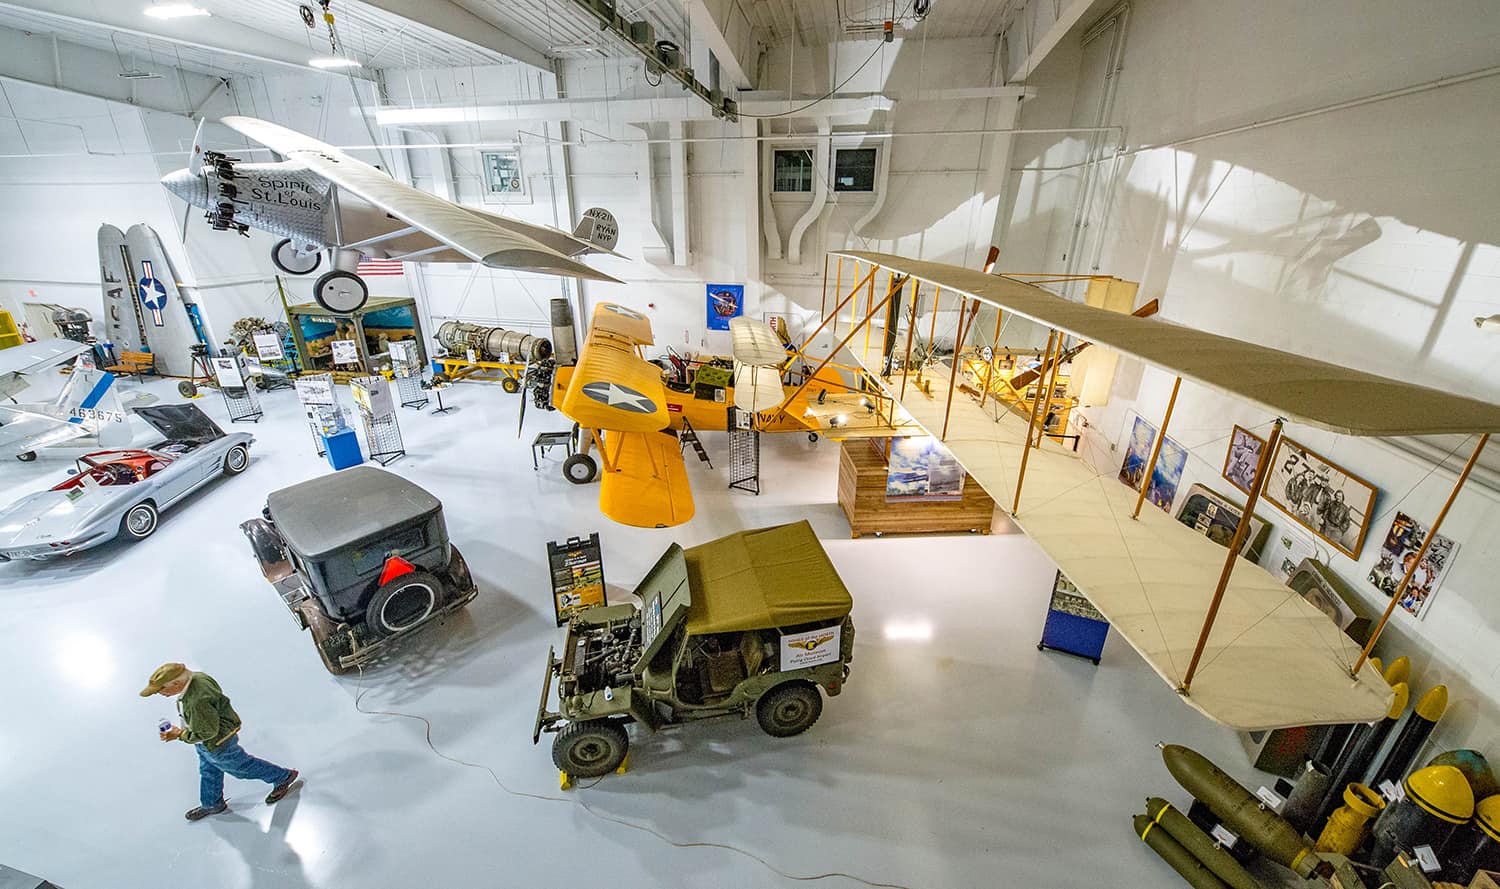 Beyblades EVERYWHERE - Museum of Aviation